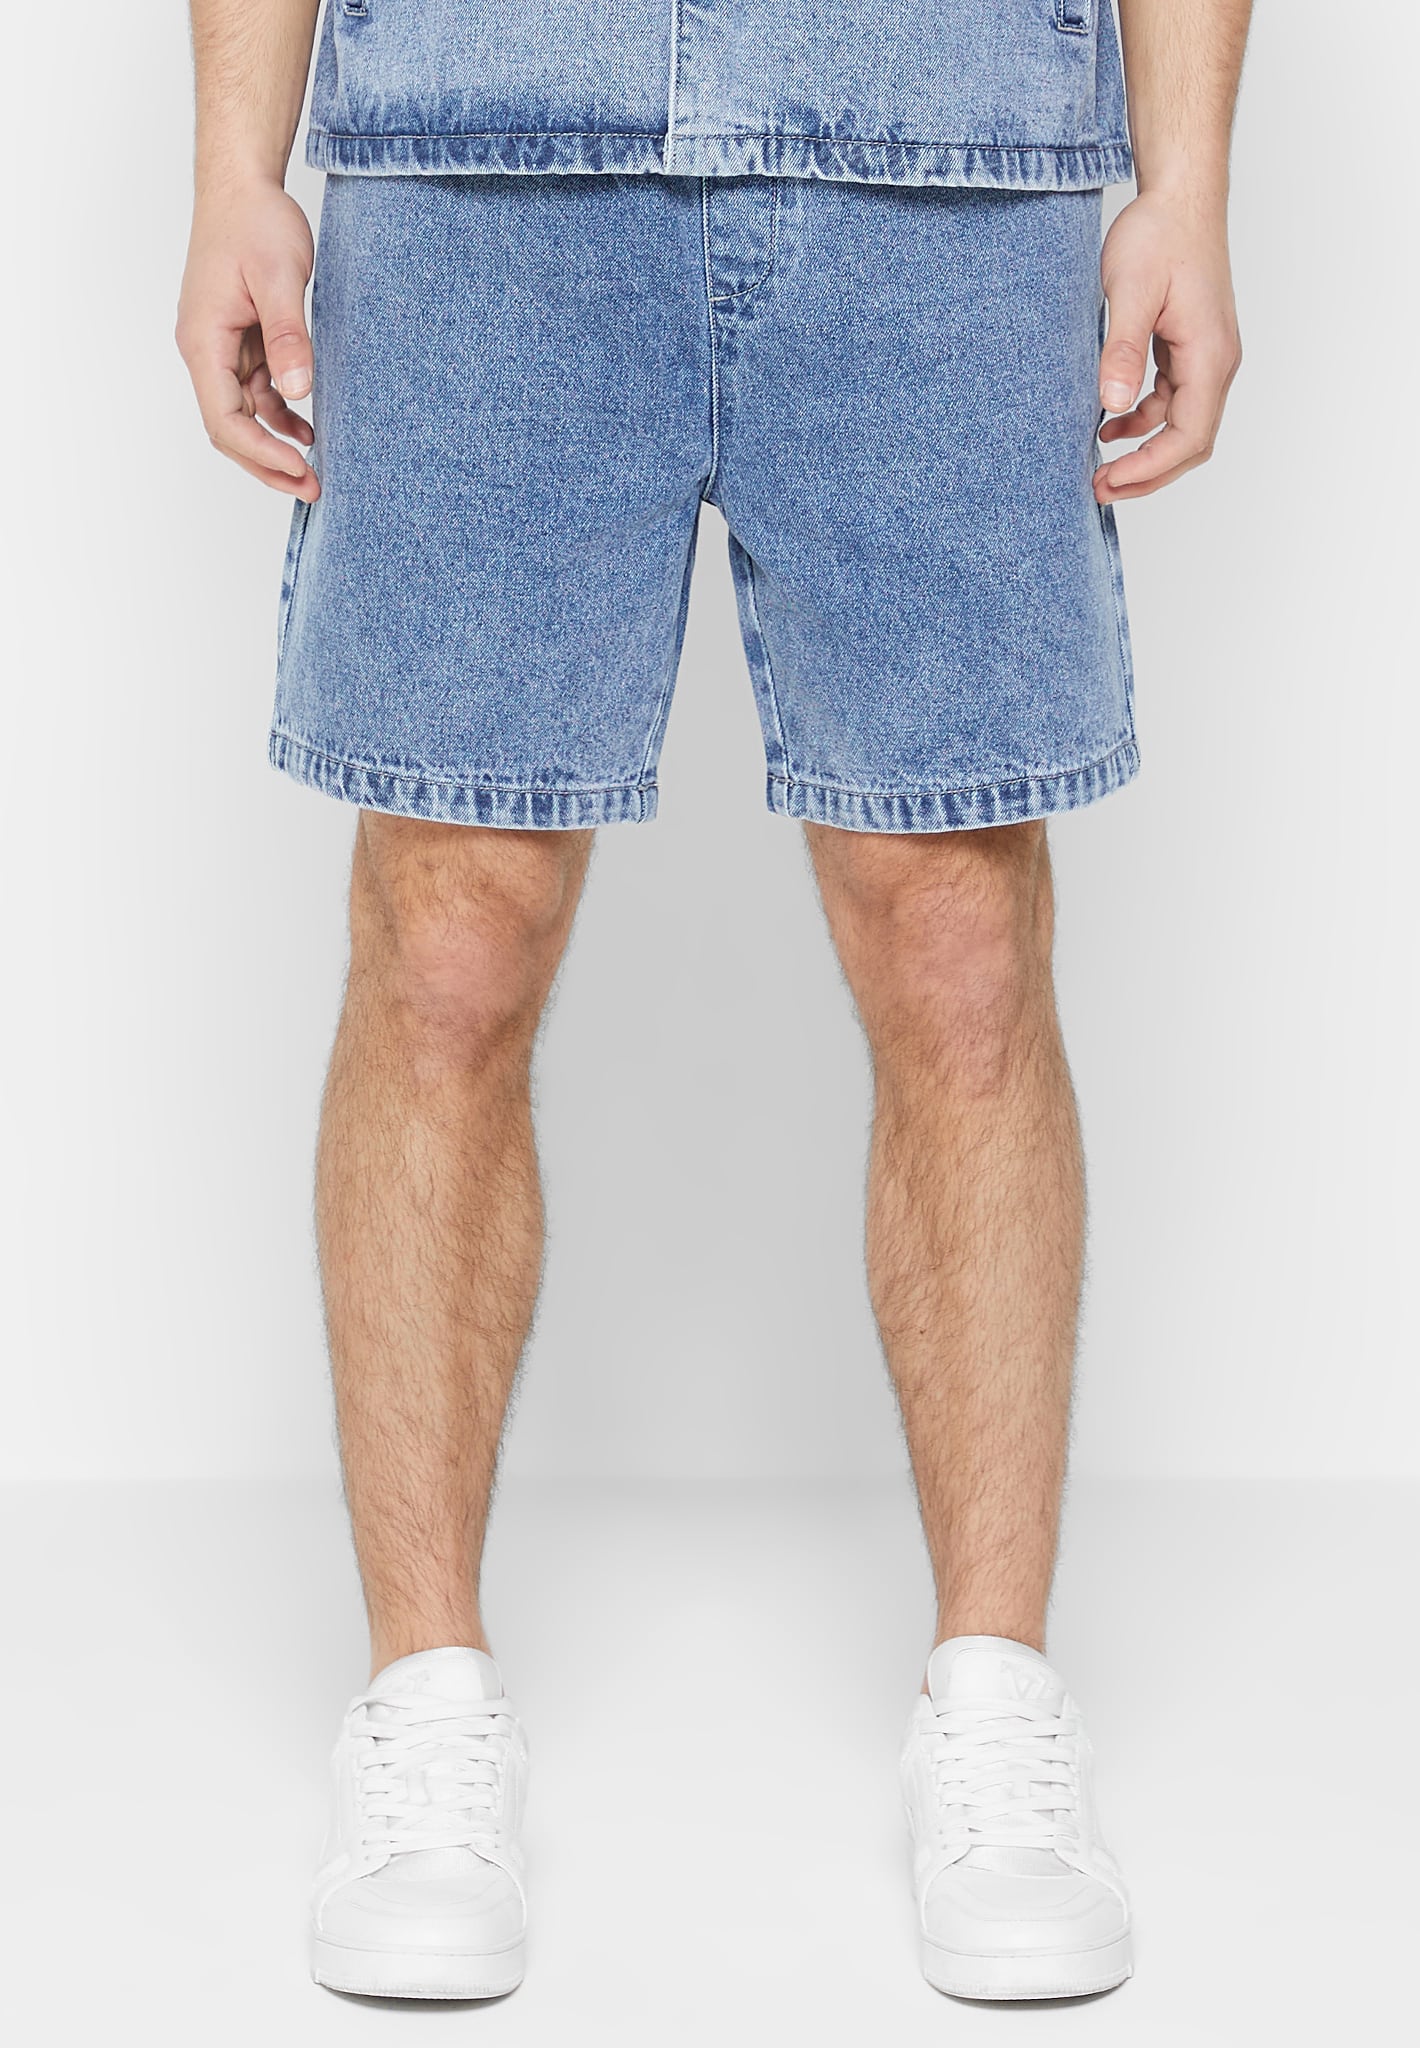 denim-shorts-mid-blue